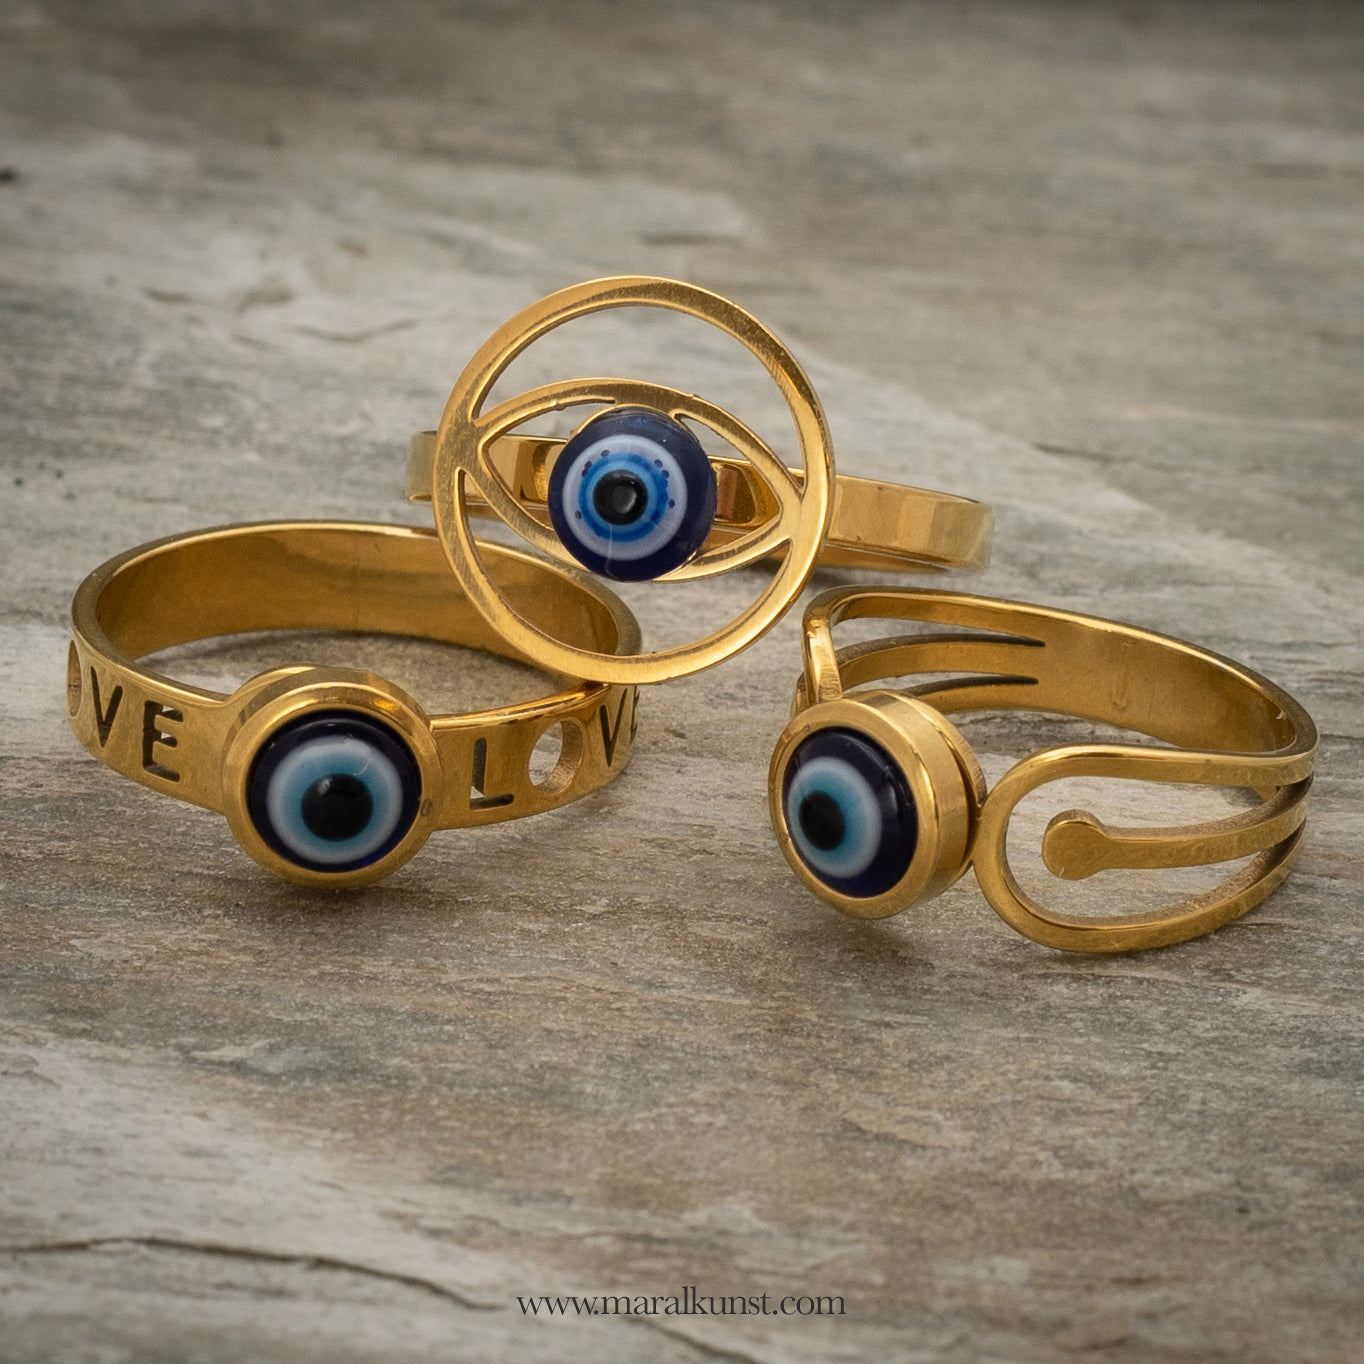 Blue evil eye amulet ring